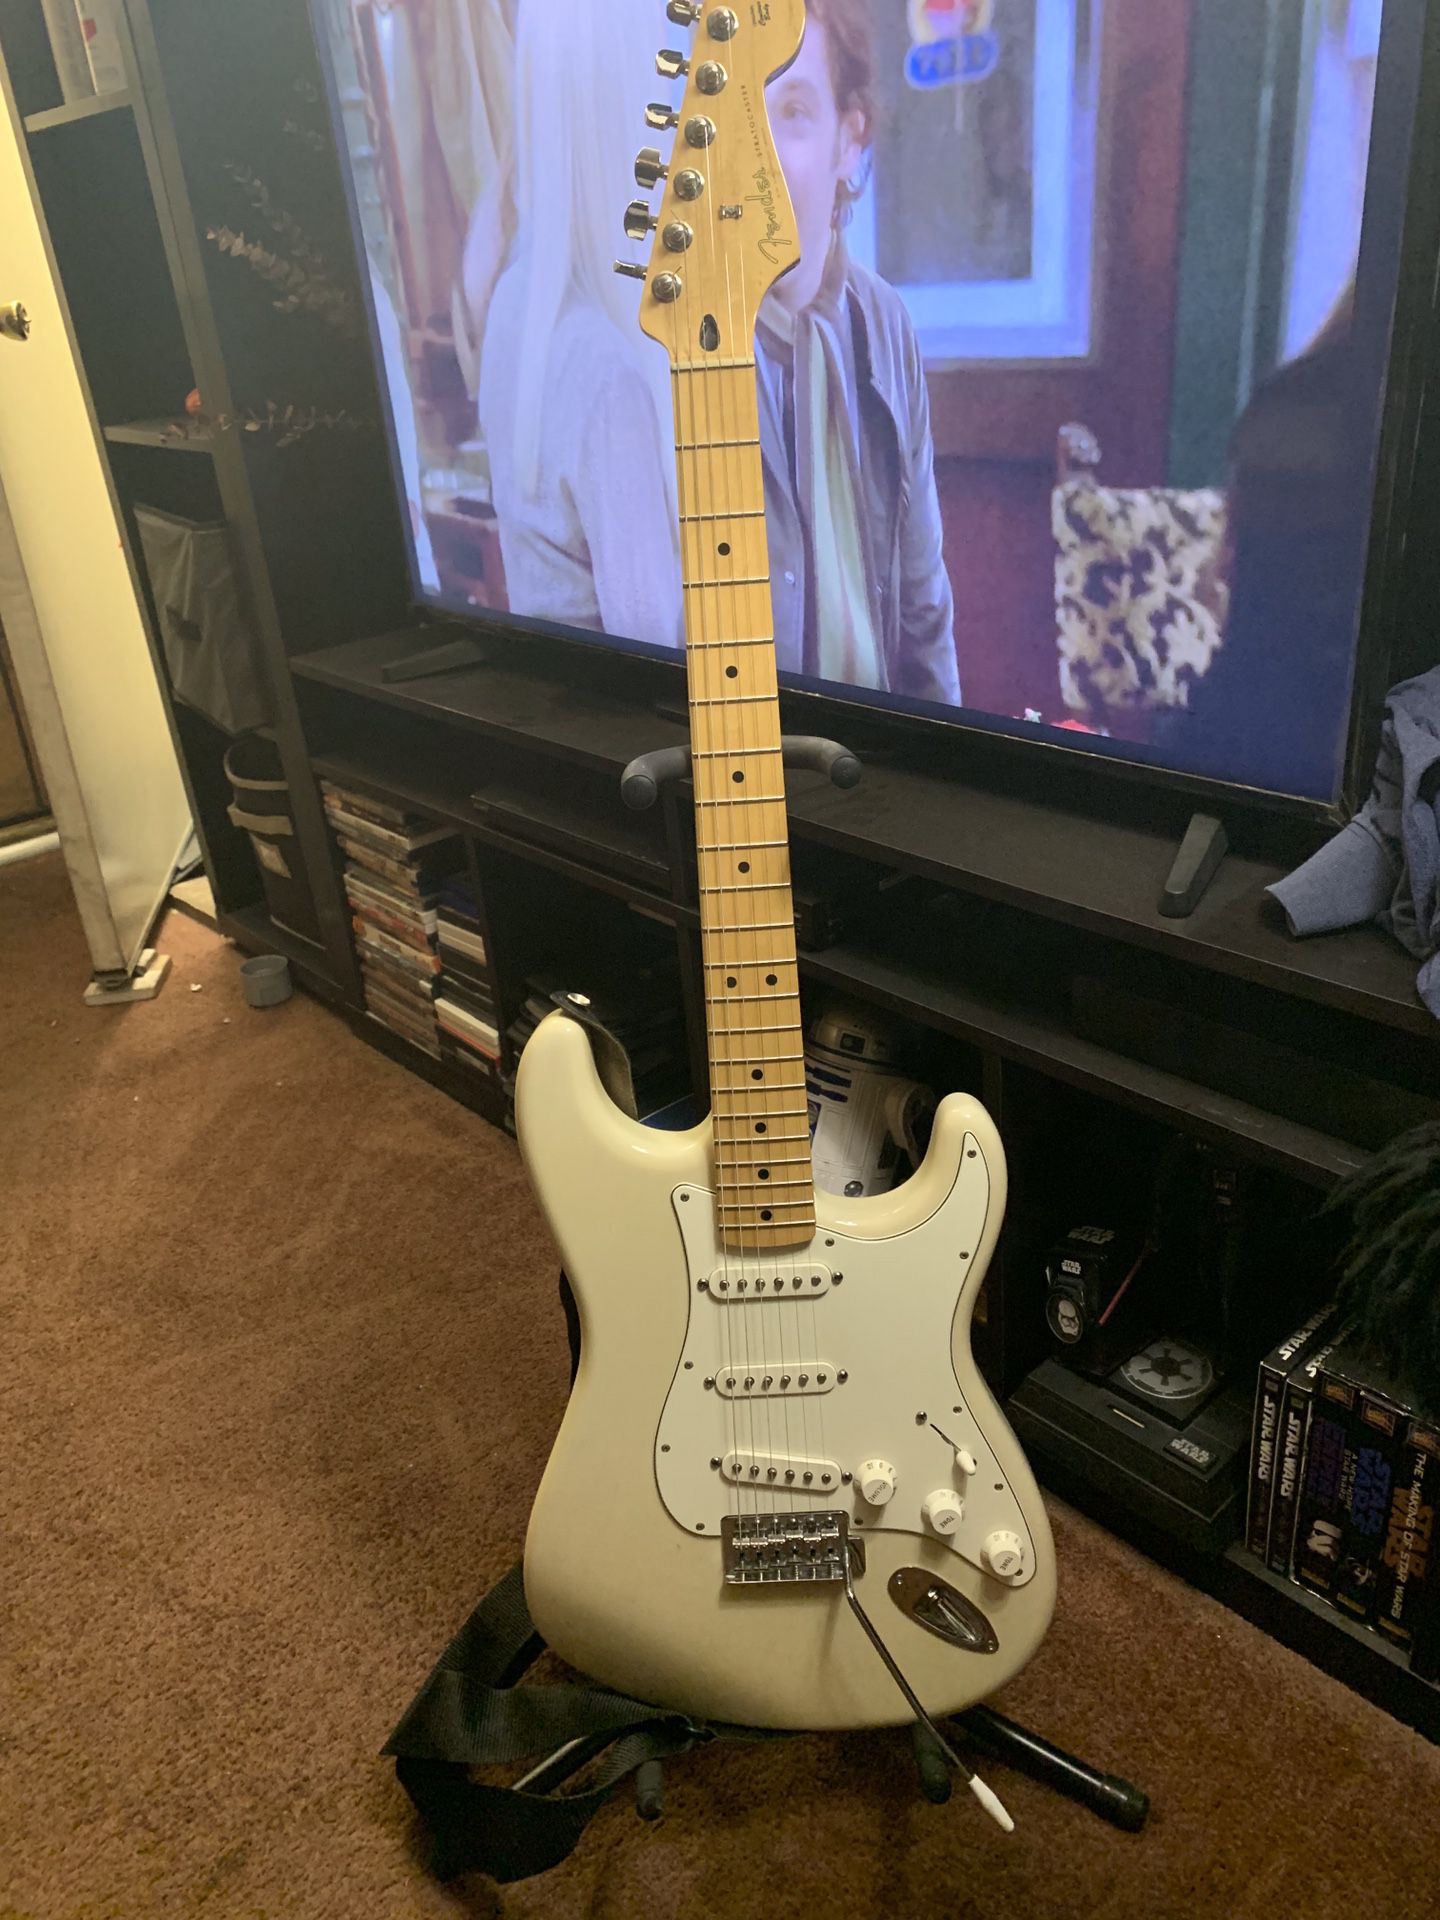 Fender Stratocaster electric guitar